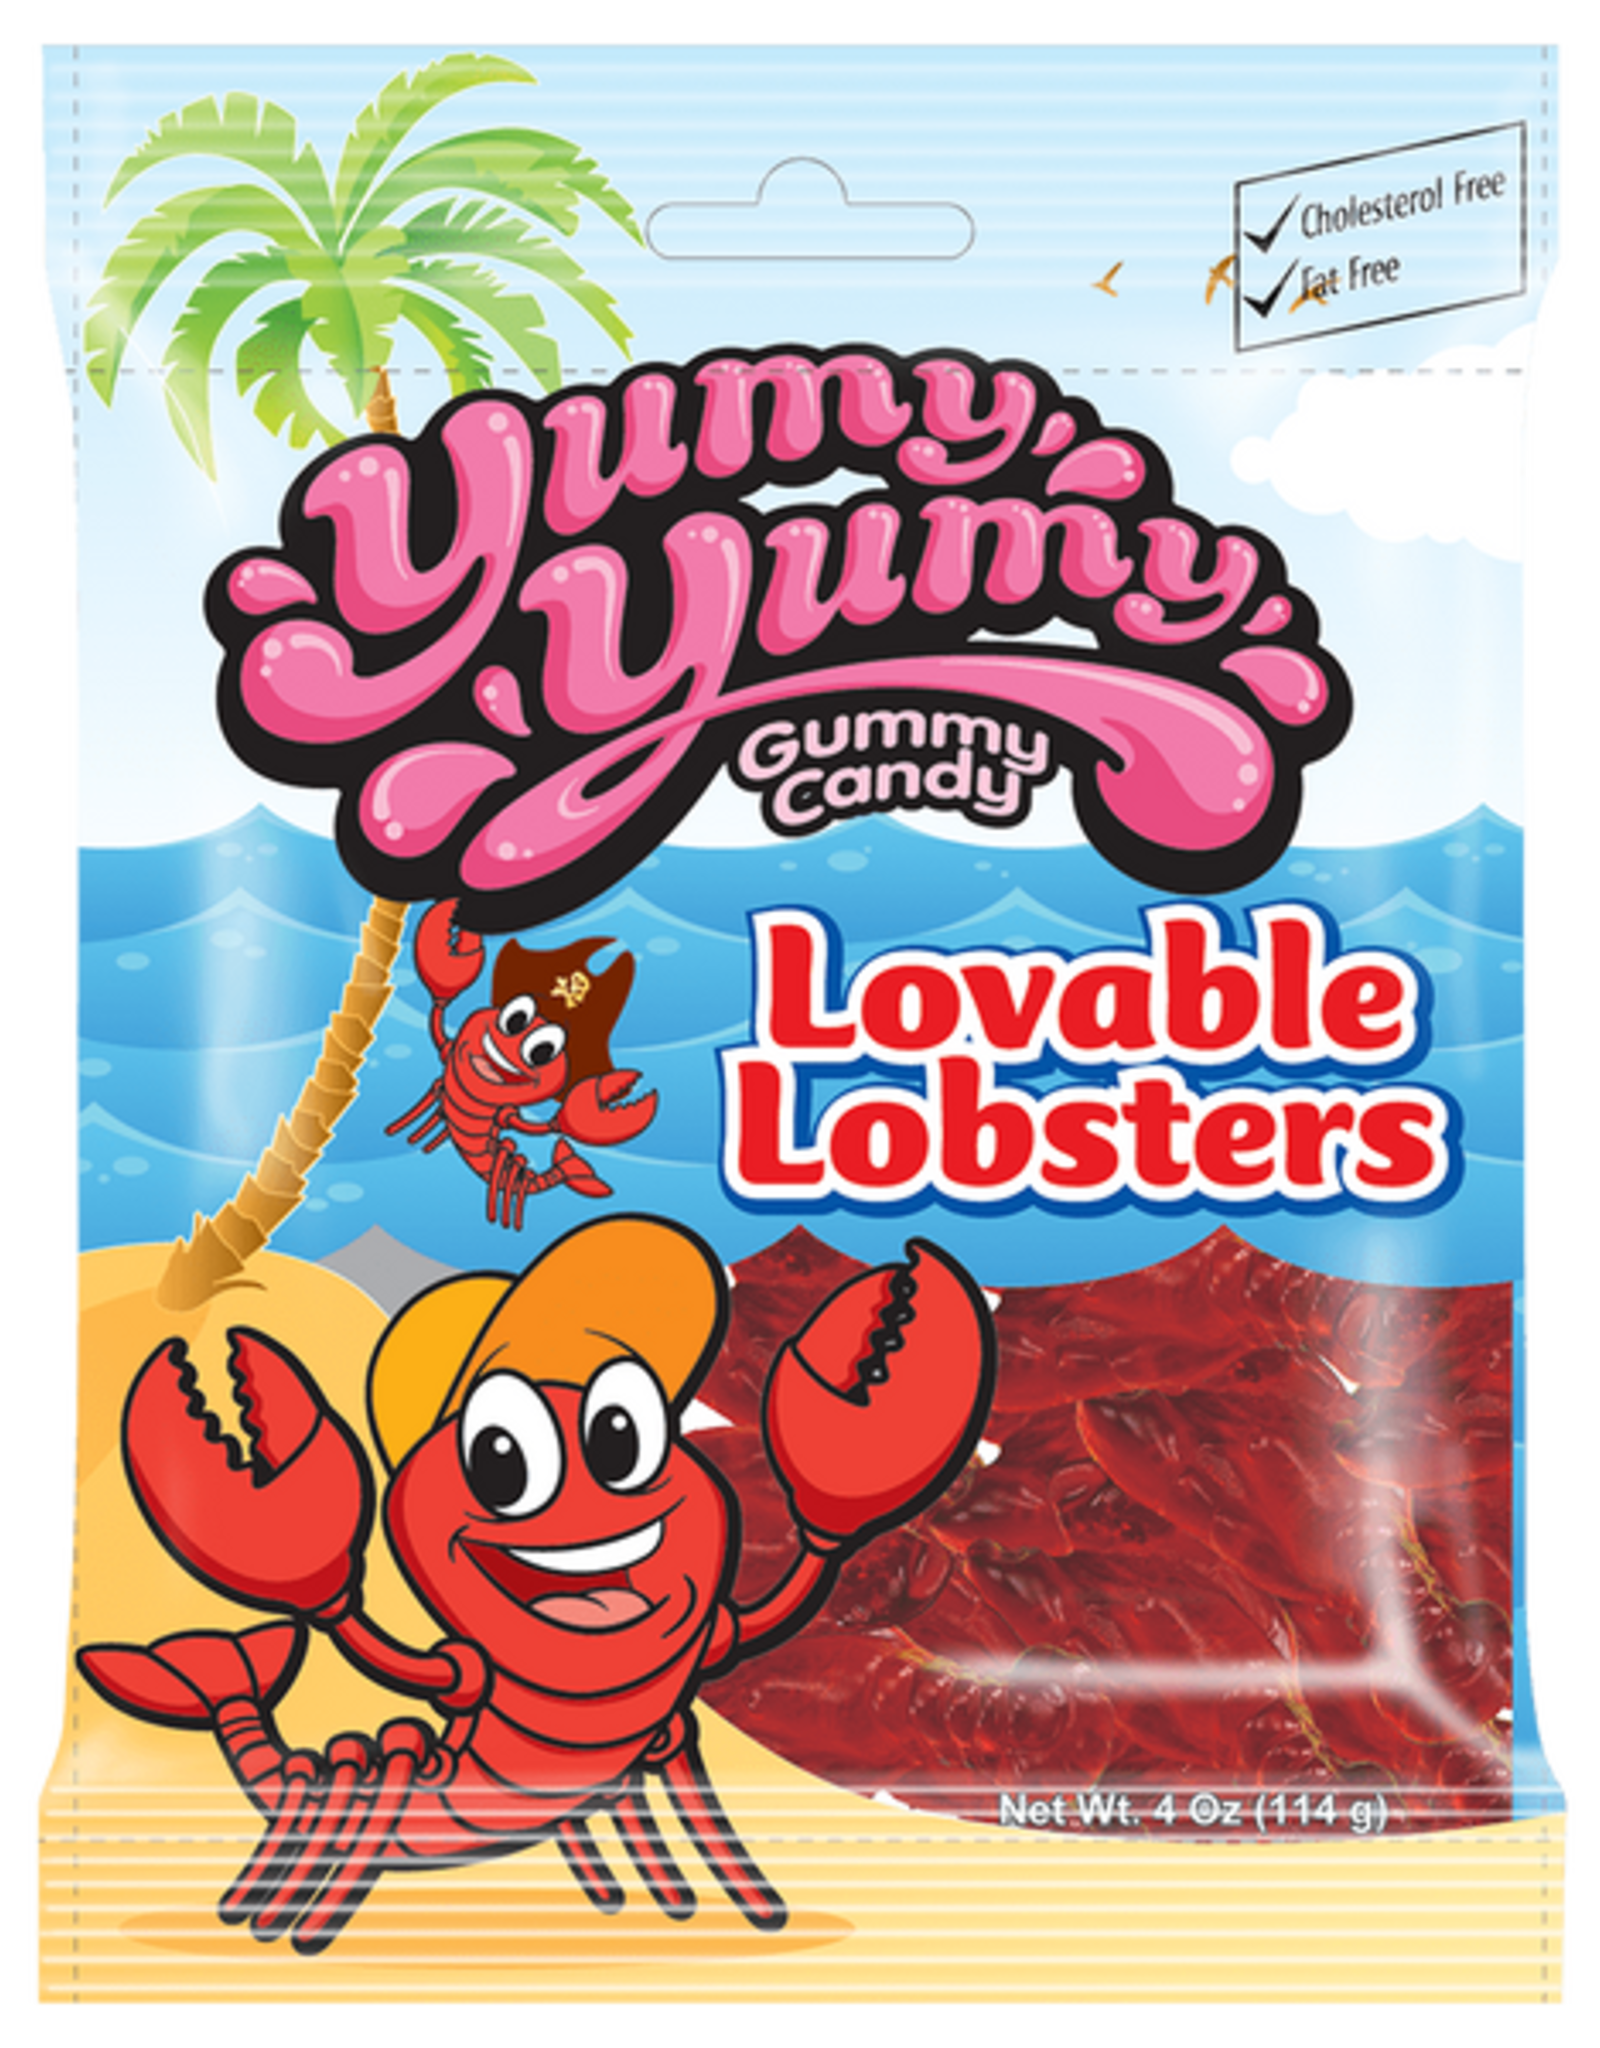 Yumy Yumy Lovable Lobster Peg Bag (Halal)